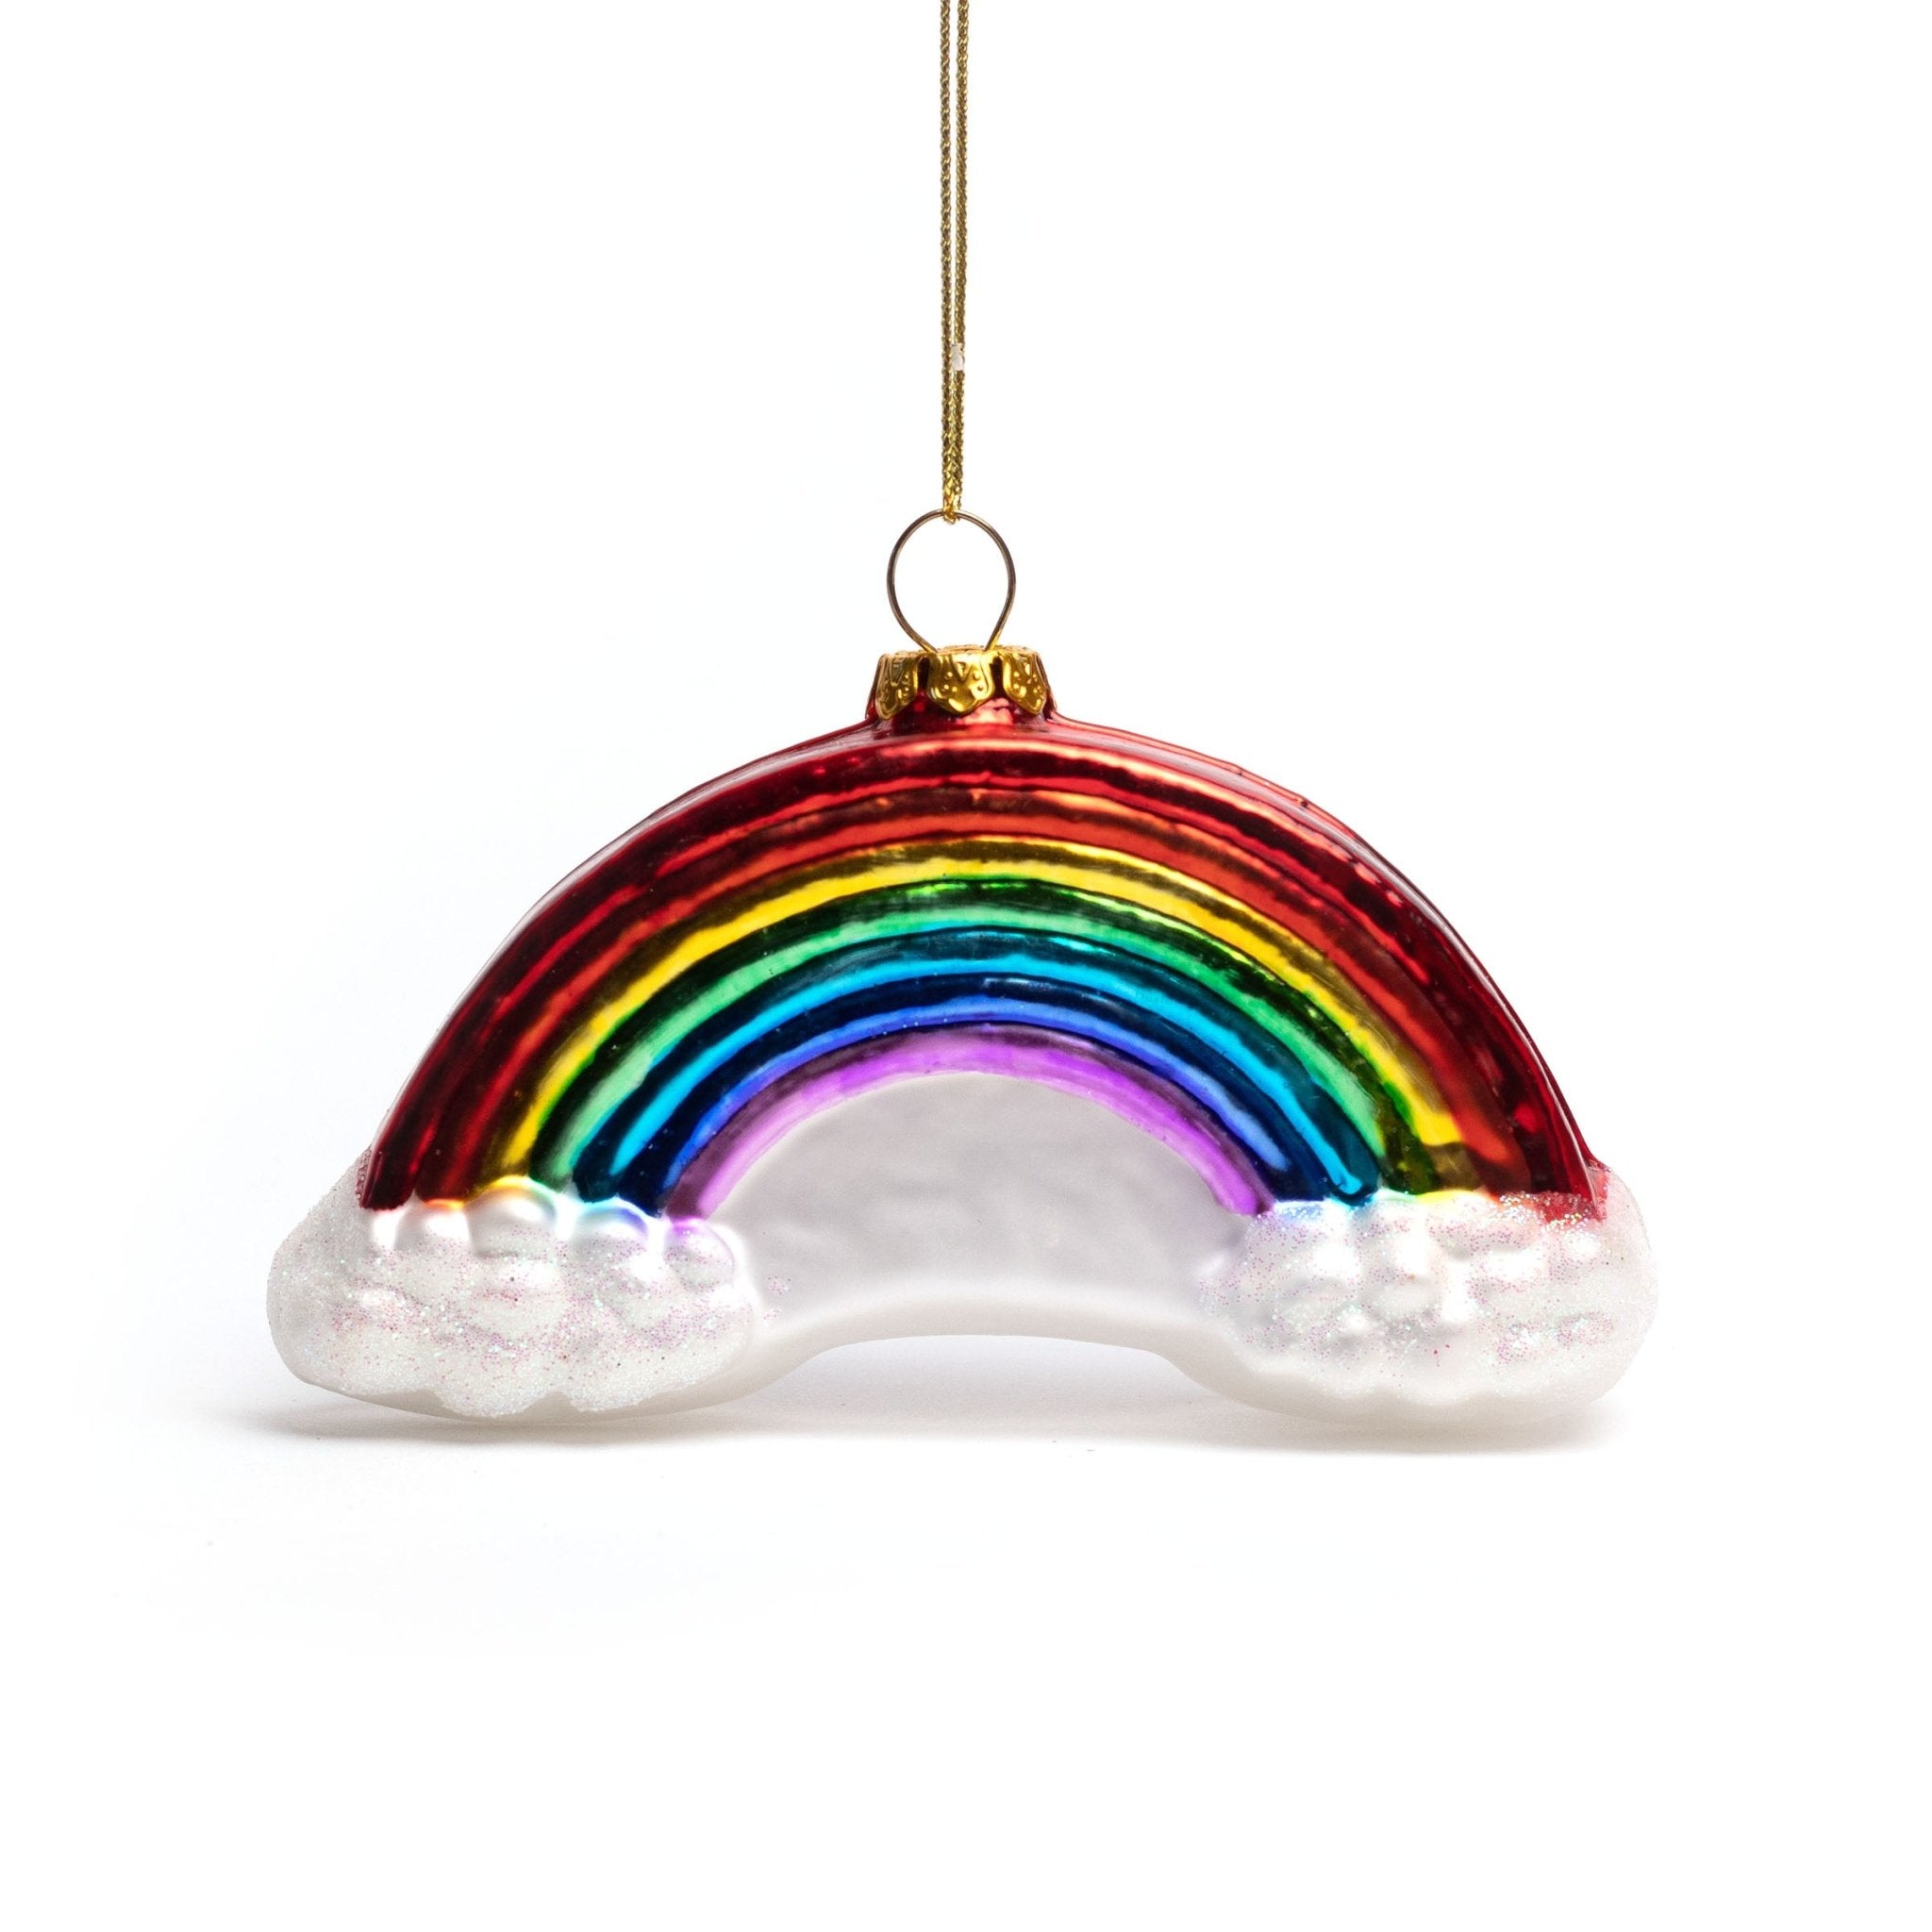 12cm Rainbow Glass Ornament OGS010 - MODA FLORA Santa's Workshop